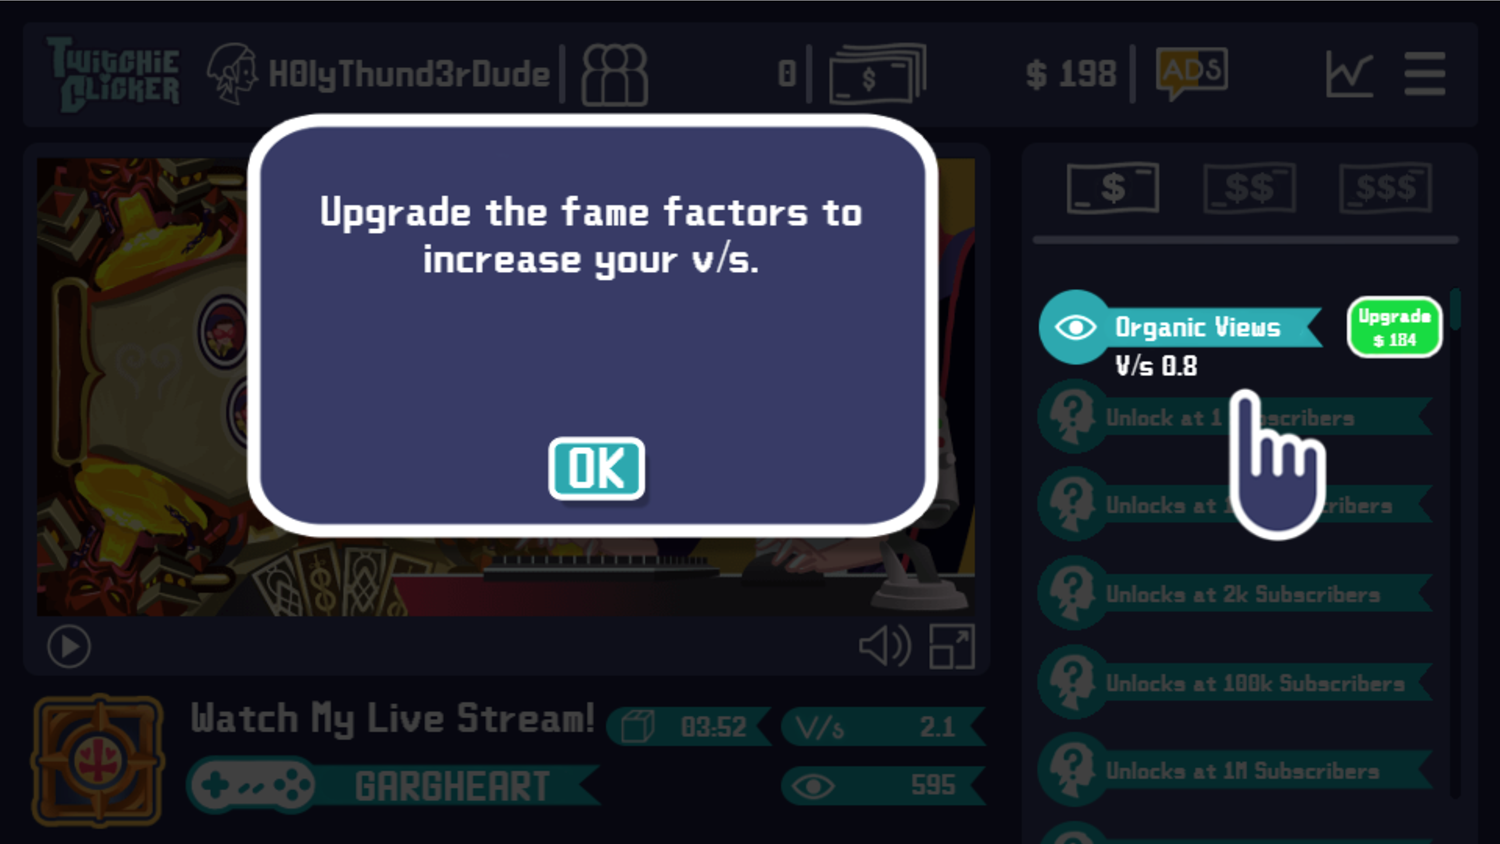 Twitchie Clicker Game Upgrade Fame Factors Information Screen Screenshot.